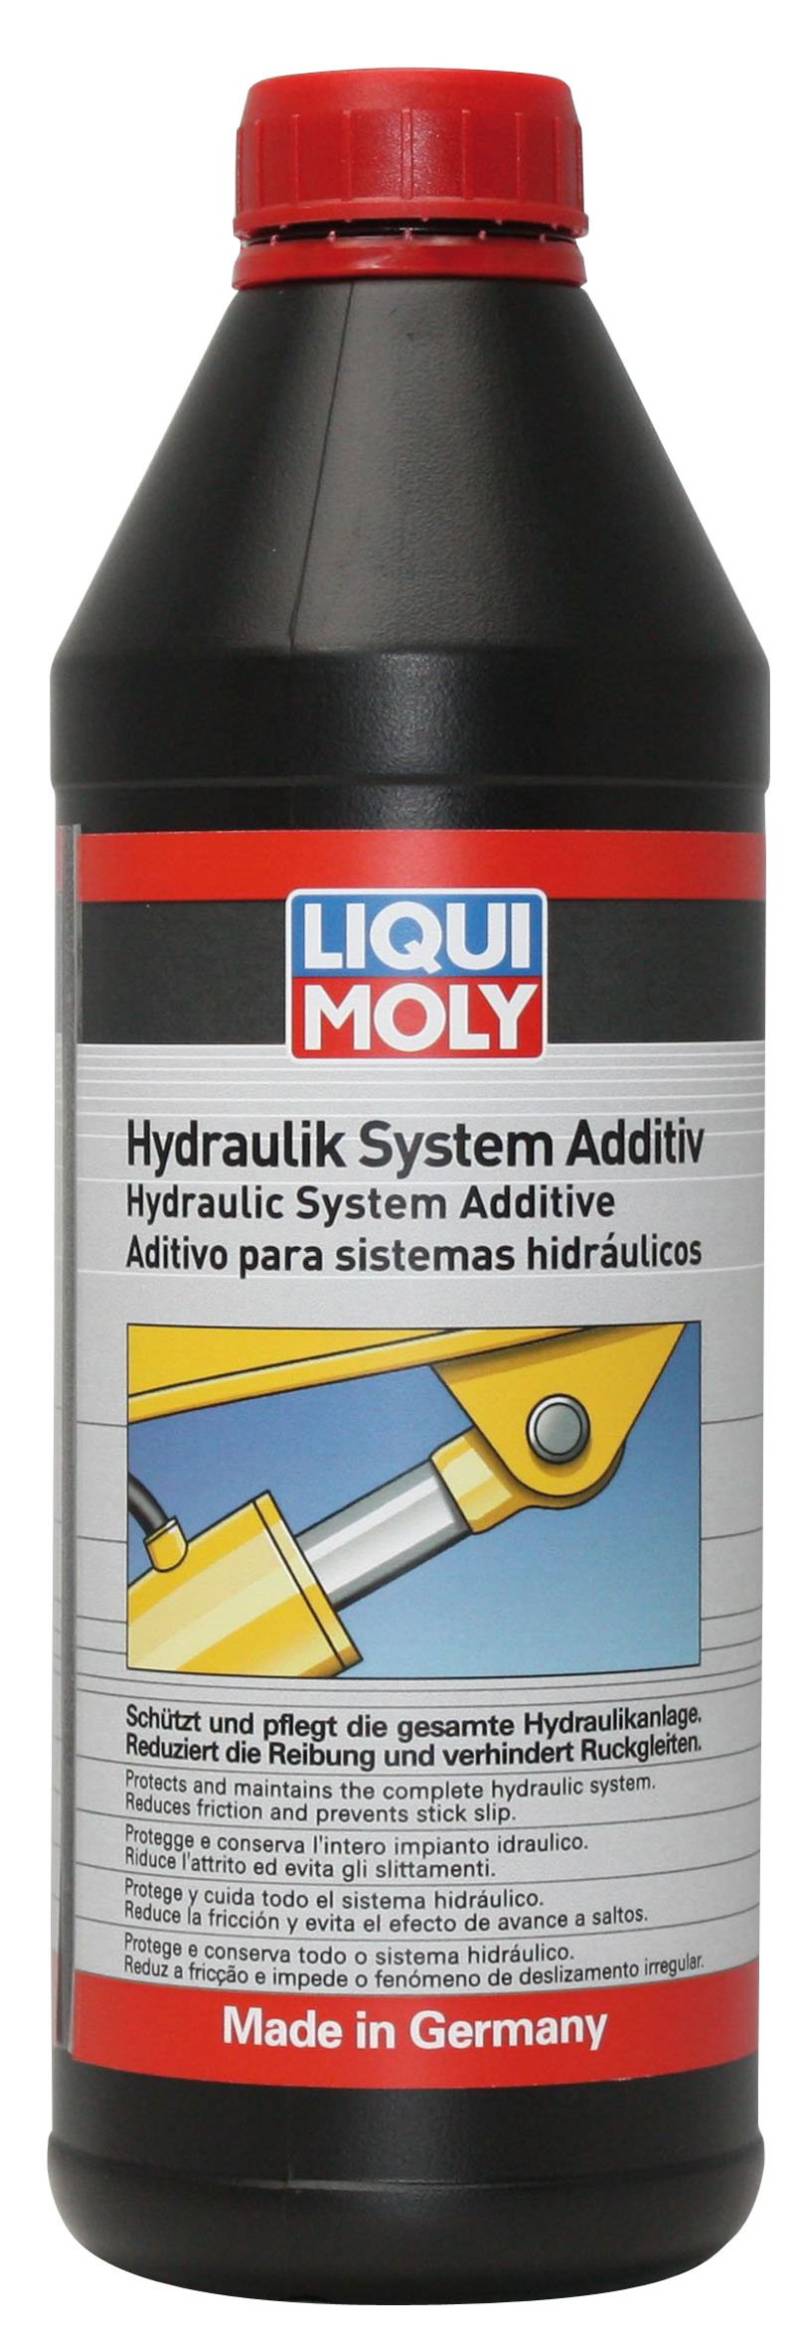 LIQUI MOLY Hydrauliksystem Additiv | 1 L | Öladditiv | Art.-Nr.: 5116 von Liqui Moly